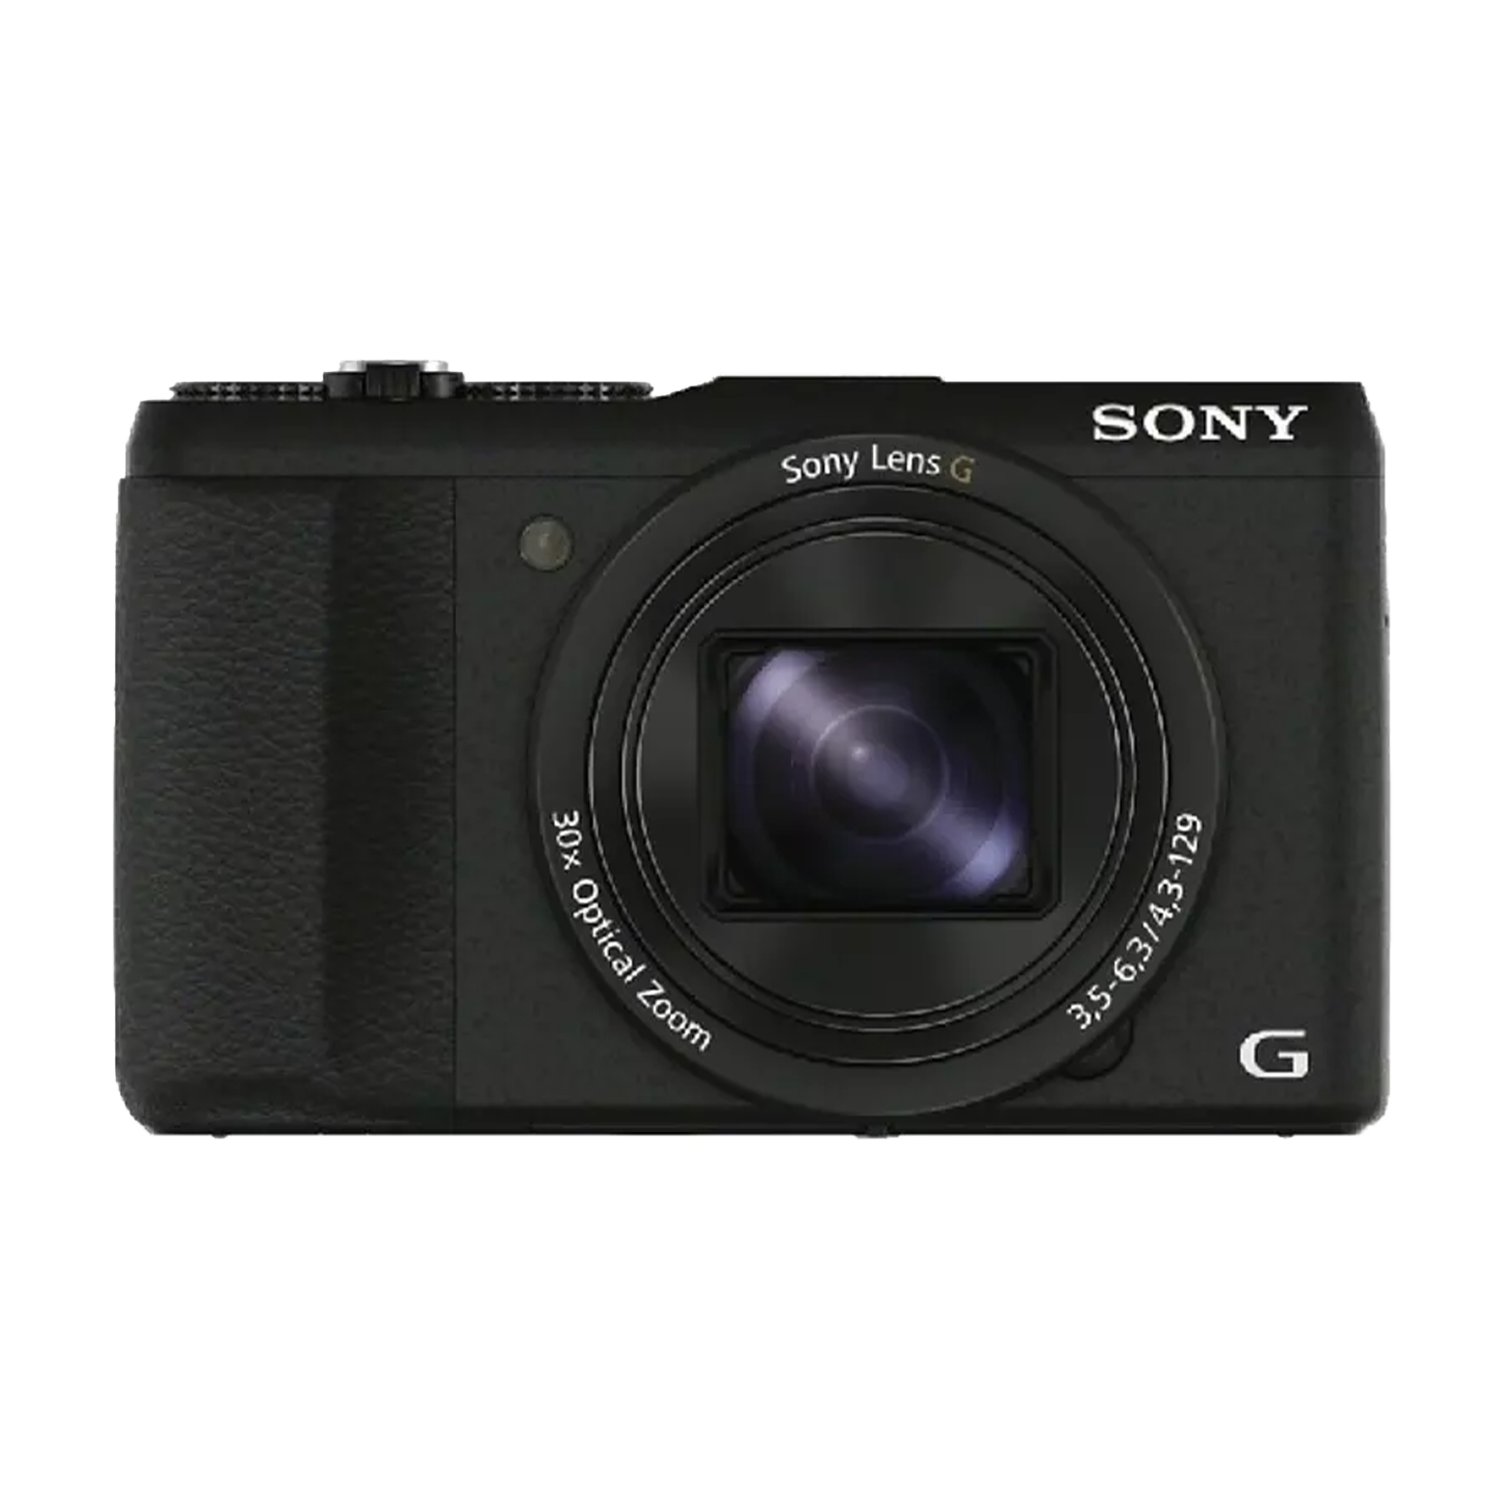 Cámara Compacta Sony dschx60b de 204 mp camara cybershot dschx60 digital negra dschx60b.ce3 hx60 negro 20.4 iso 80 3200 zoom 30x 20mp wifi sensor cmos 3